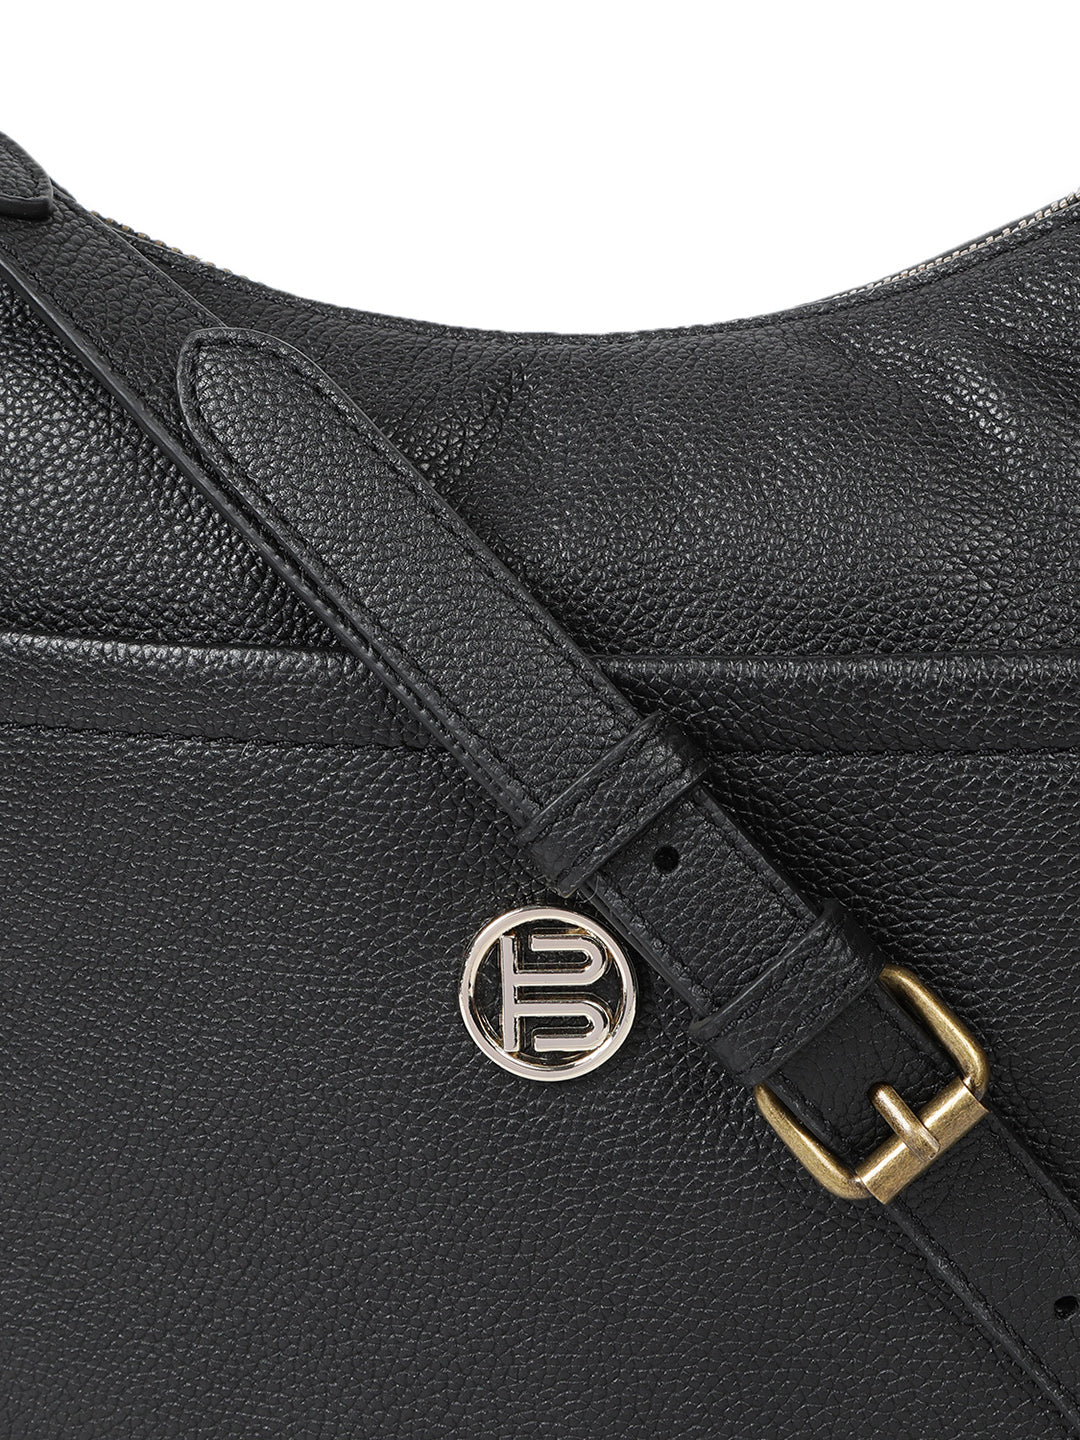 Campania Black Leather Cross Body Messenger Bag